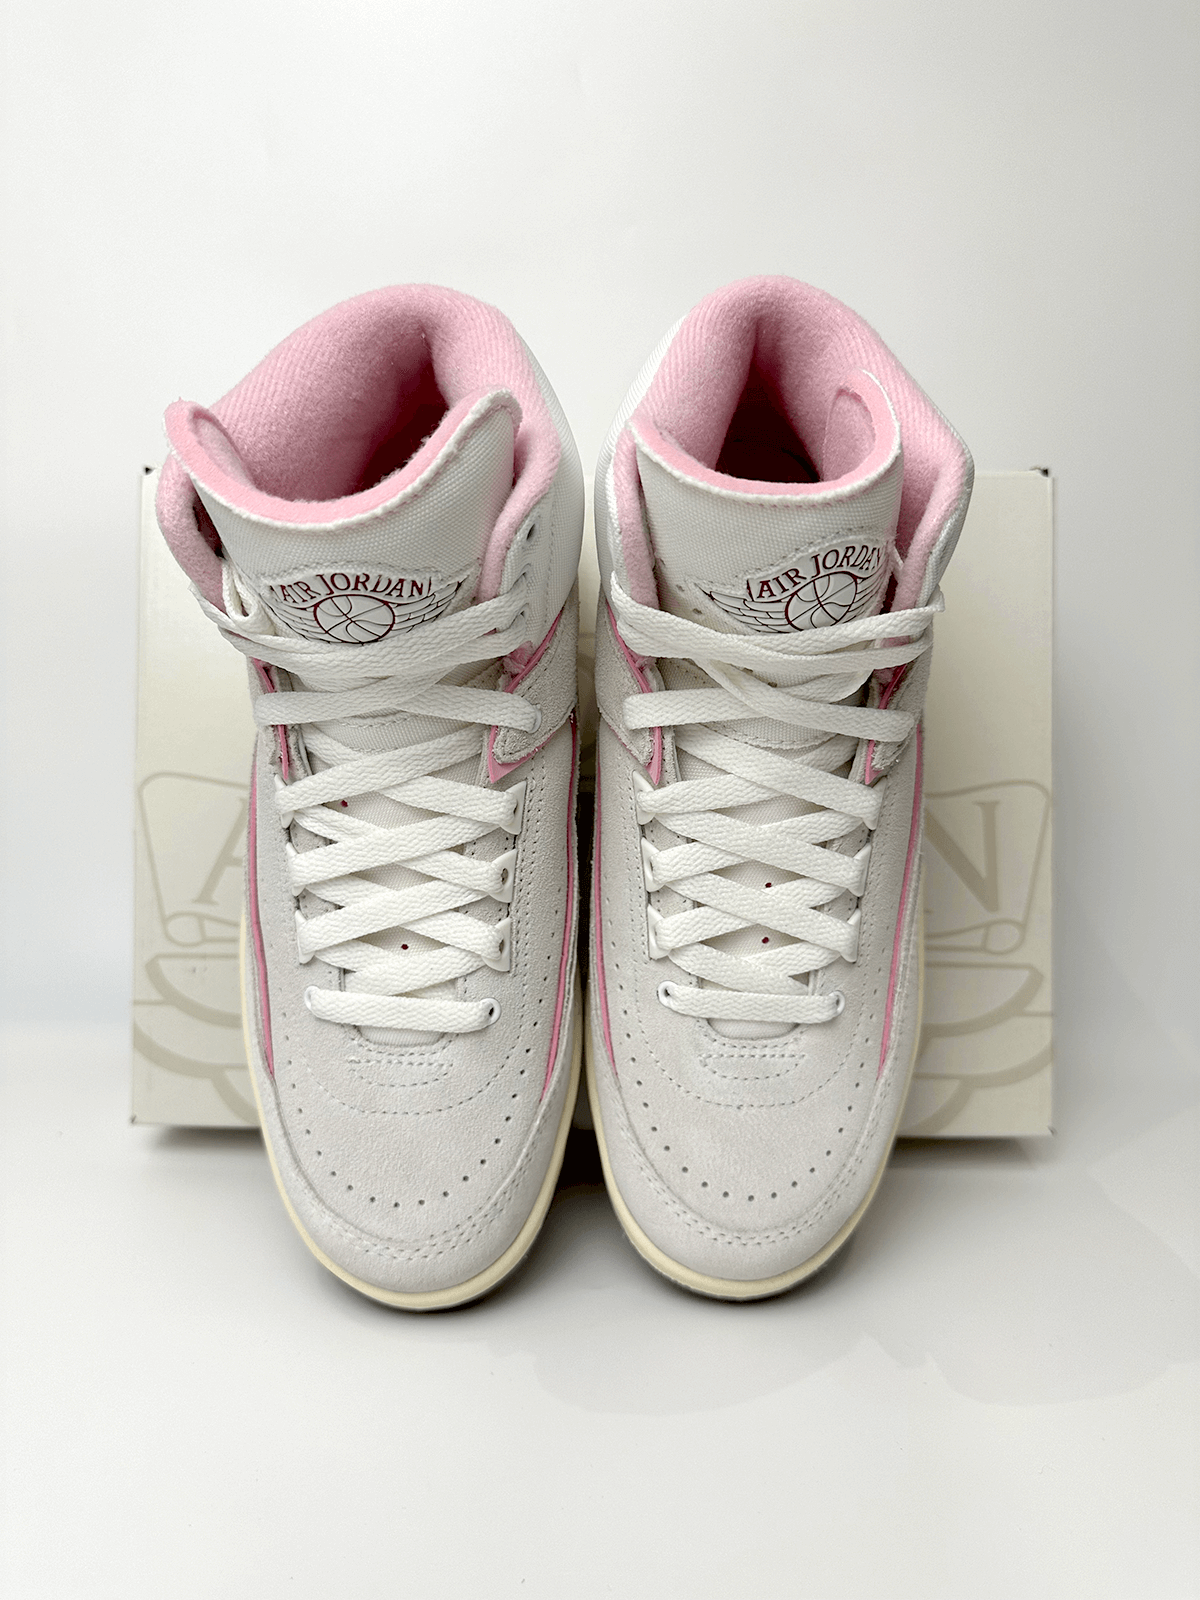 Jordan 2 Soft Pink